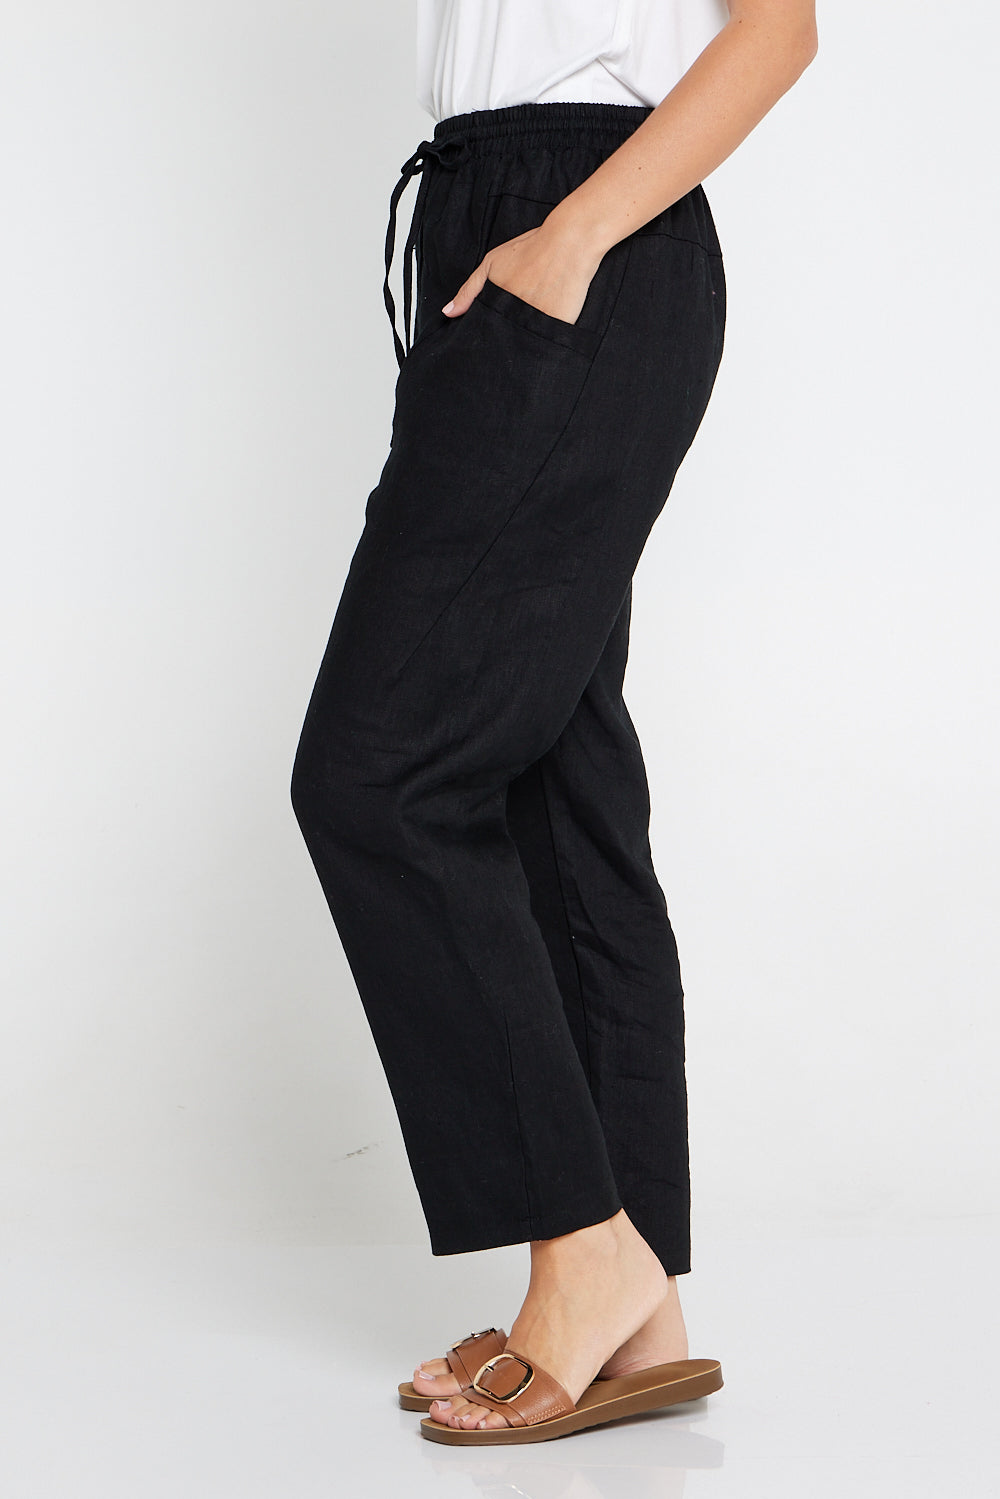 NEHERA Prusso Trouser 100% Linen Black Crop Pants Lagenlook Size 36 | eBay